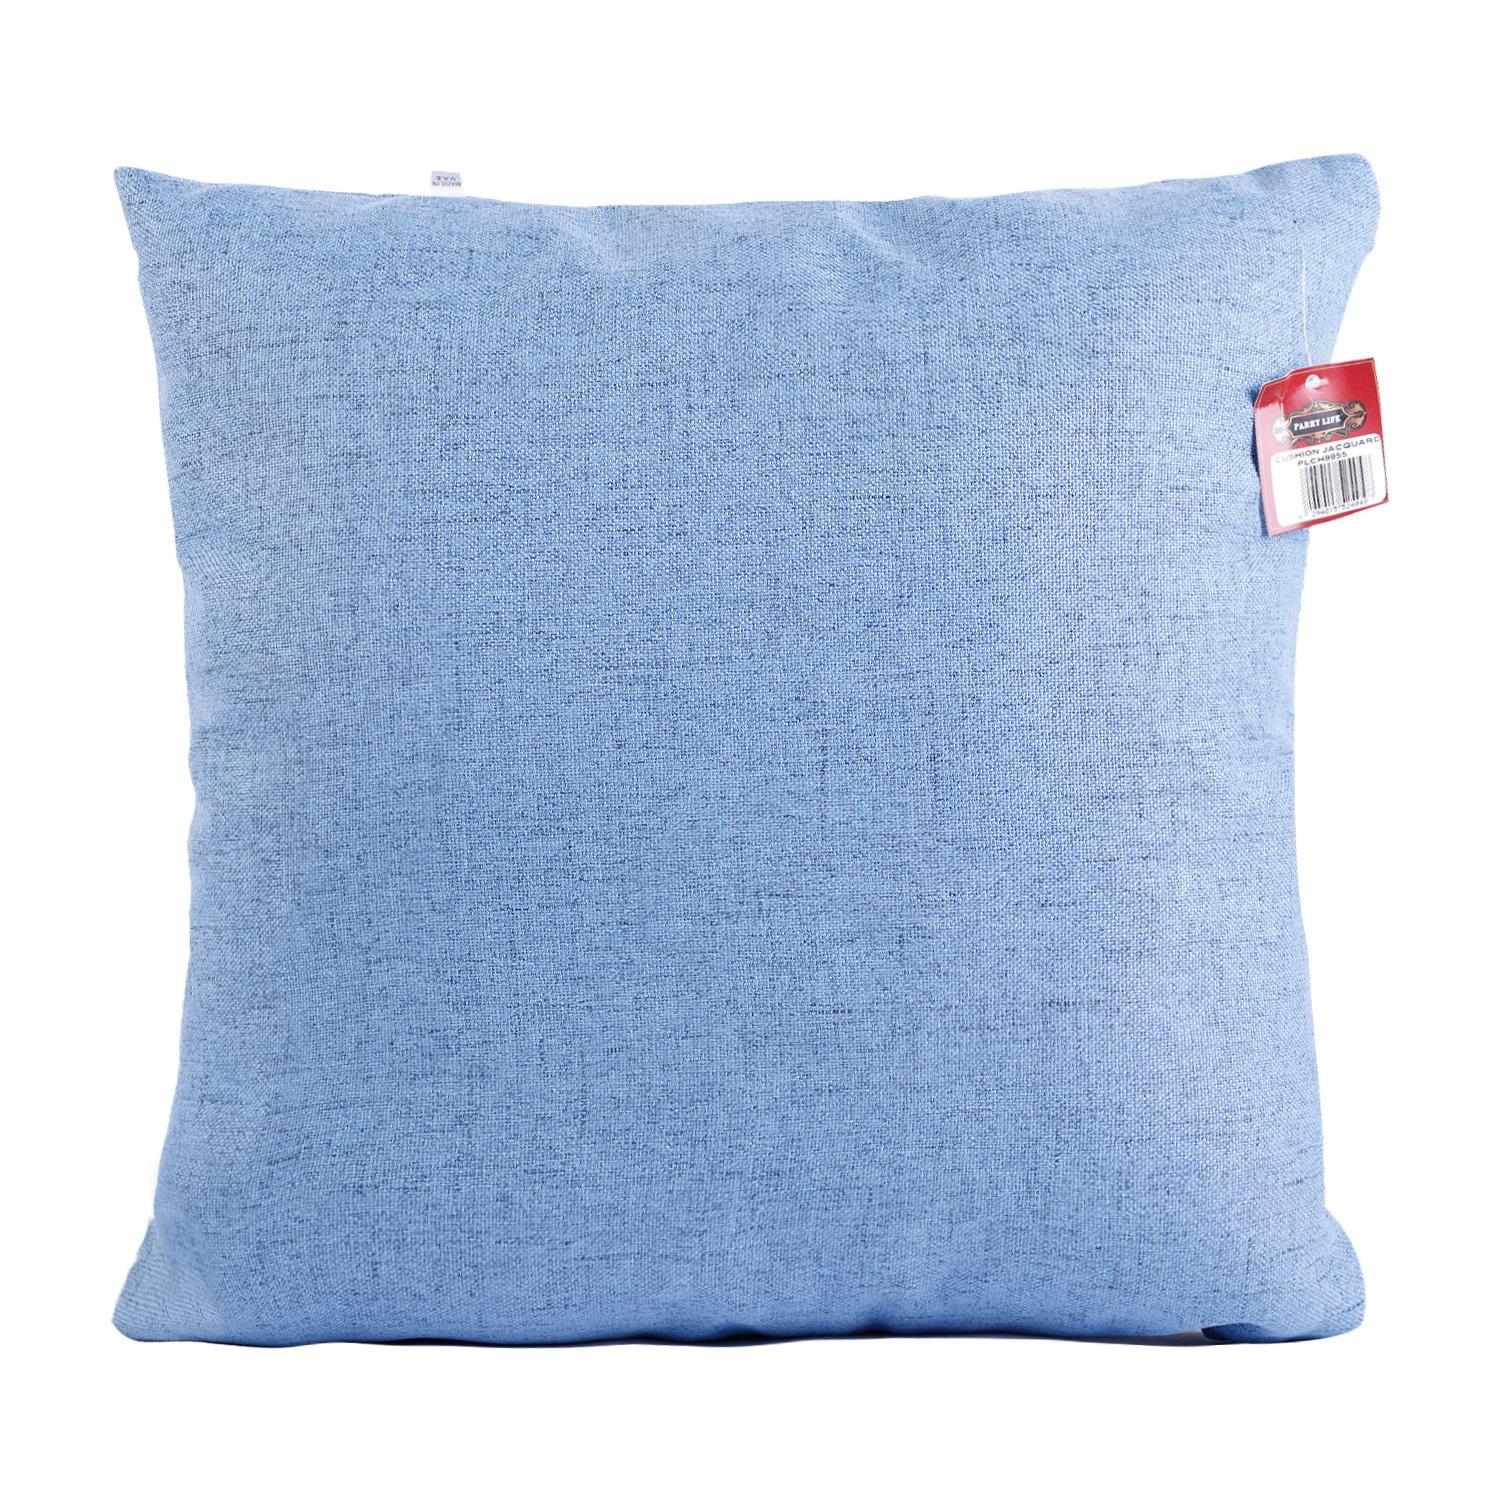 وسادة مربعة 44 * 44 سم - أزرق PARRY LIFE Decorative Jacquard Cushion Pillow